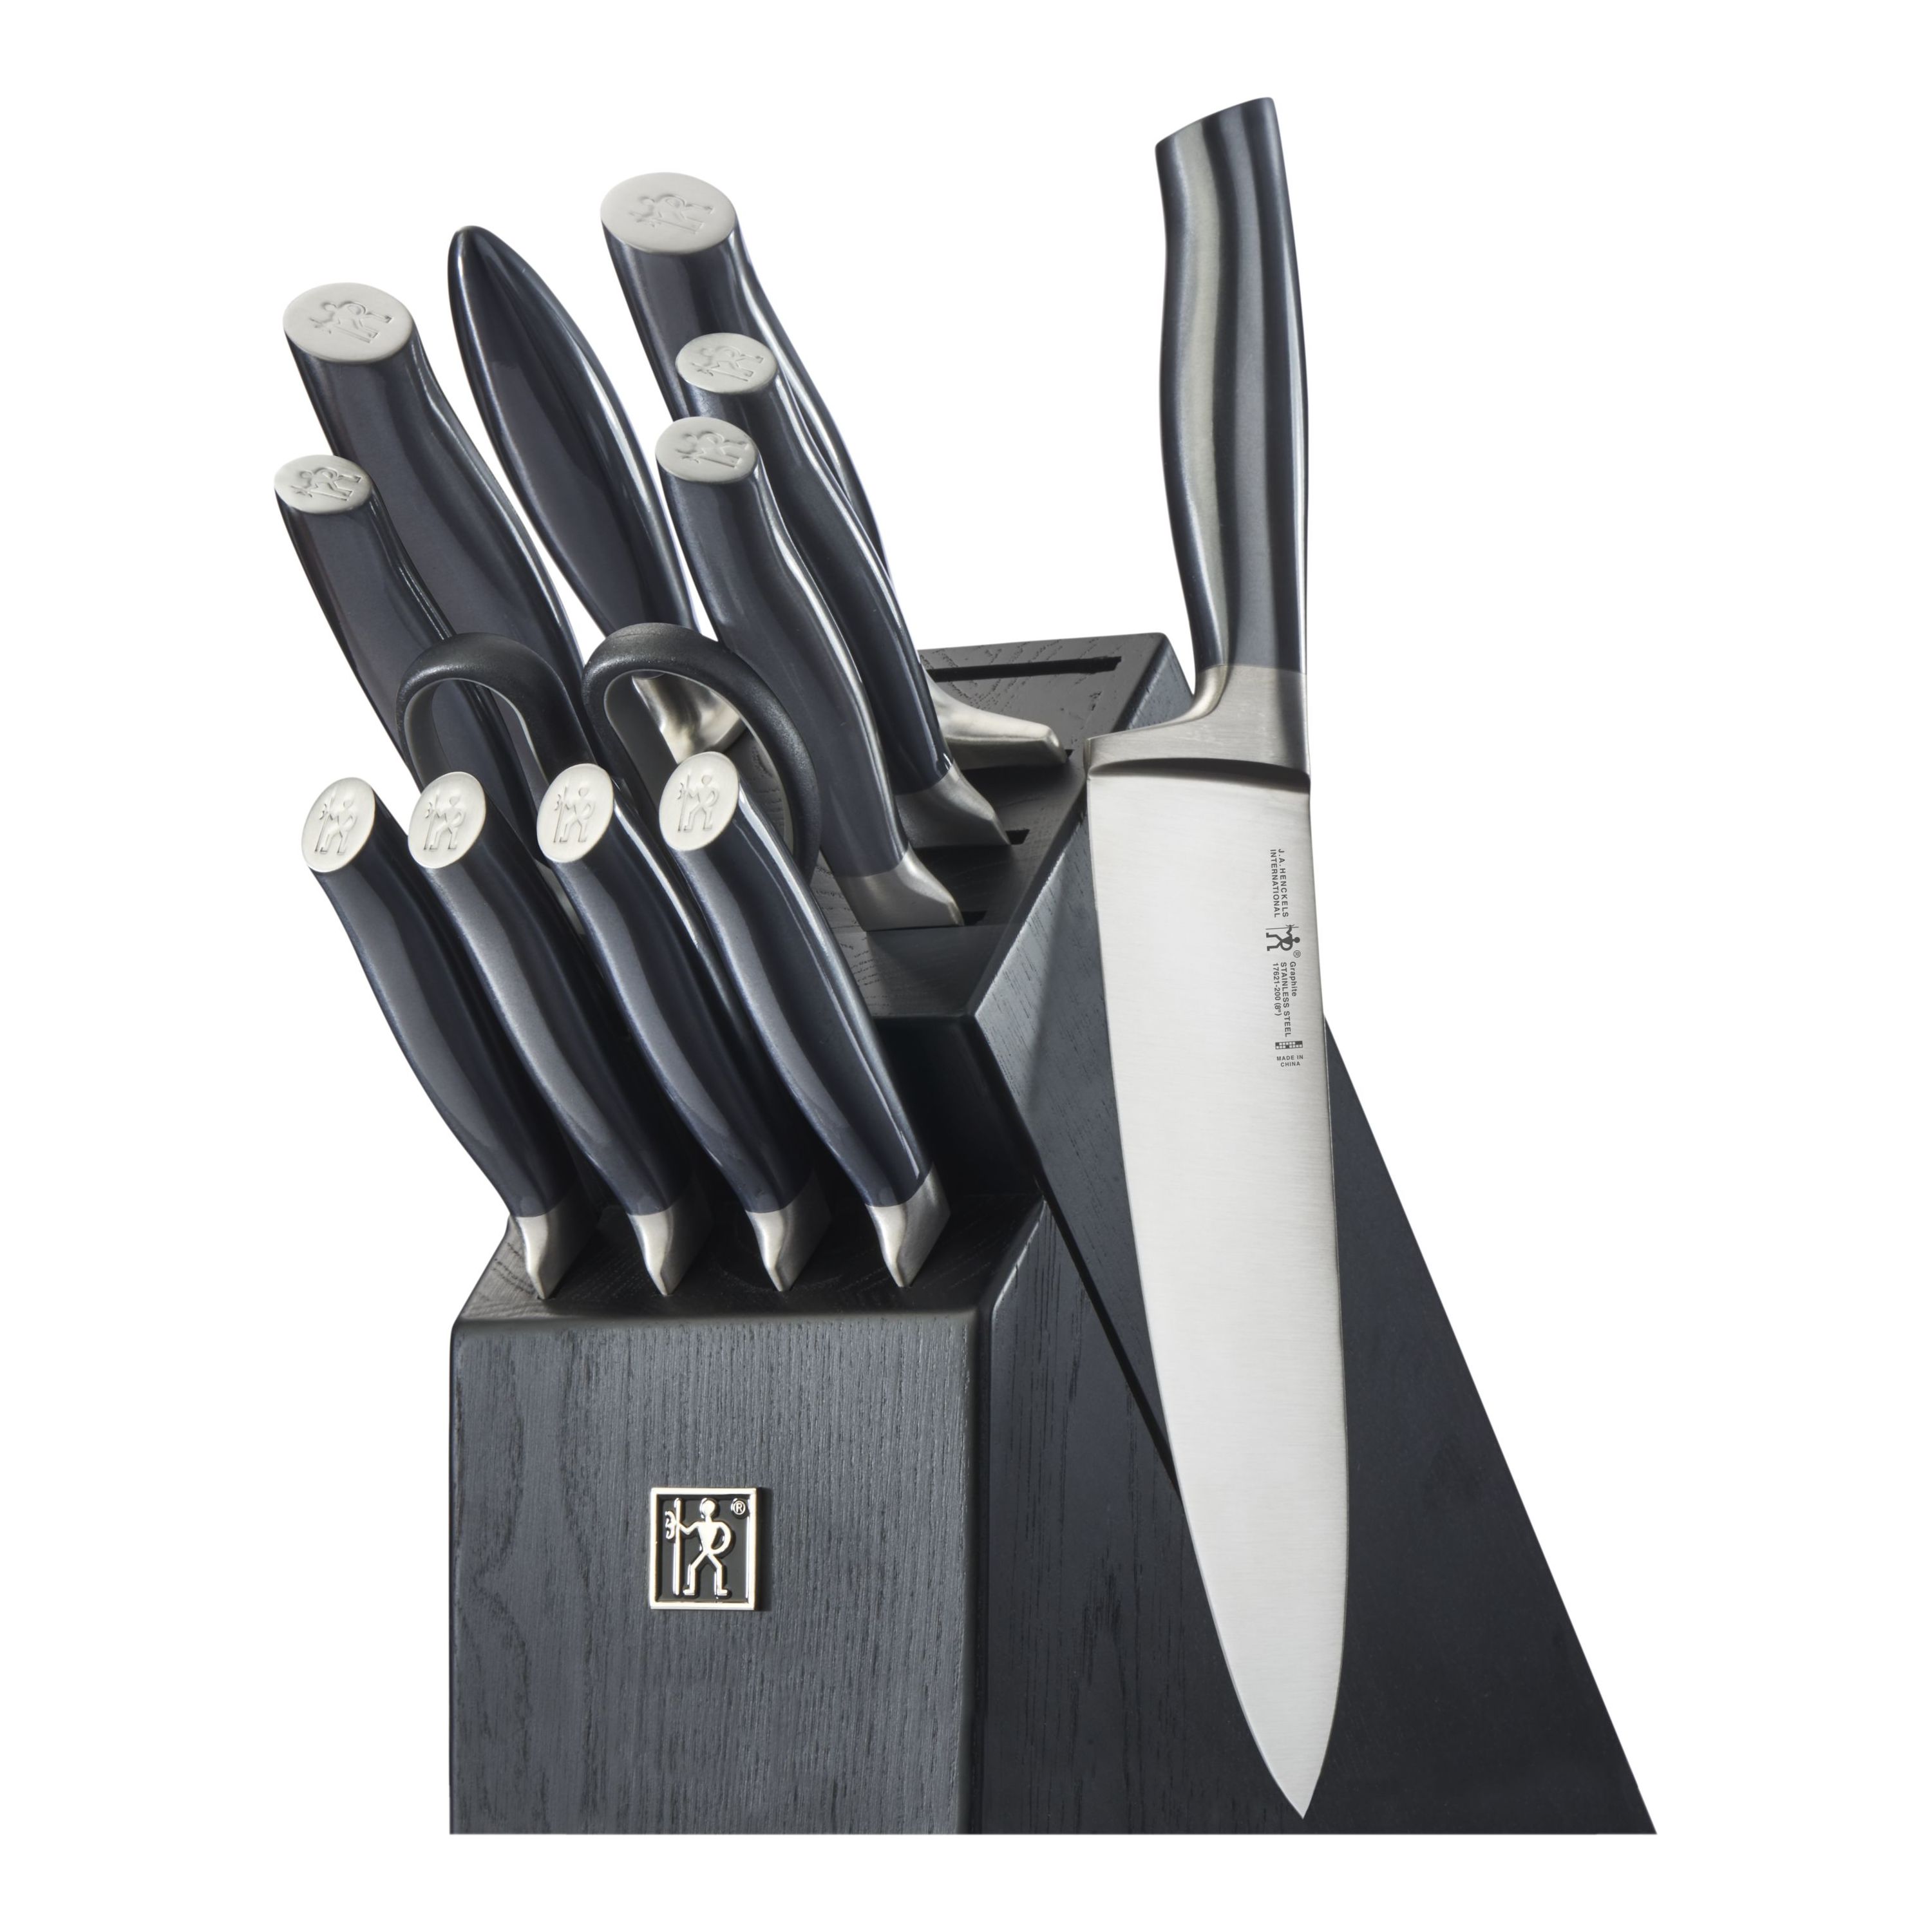 Henckels Graphite 13-Piece Knife Block Set & Reviews